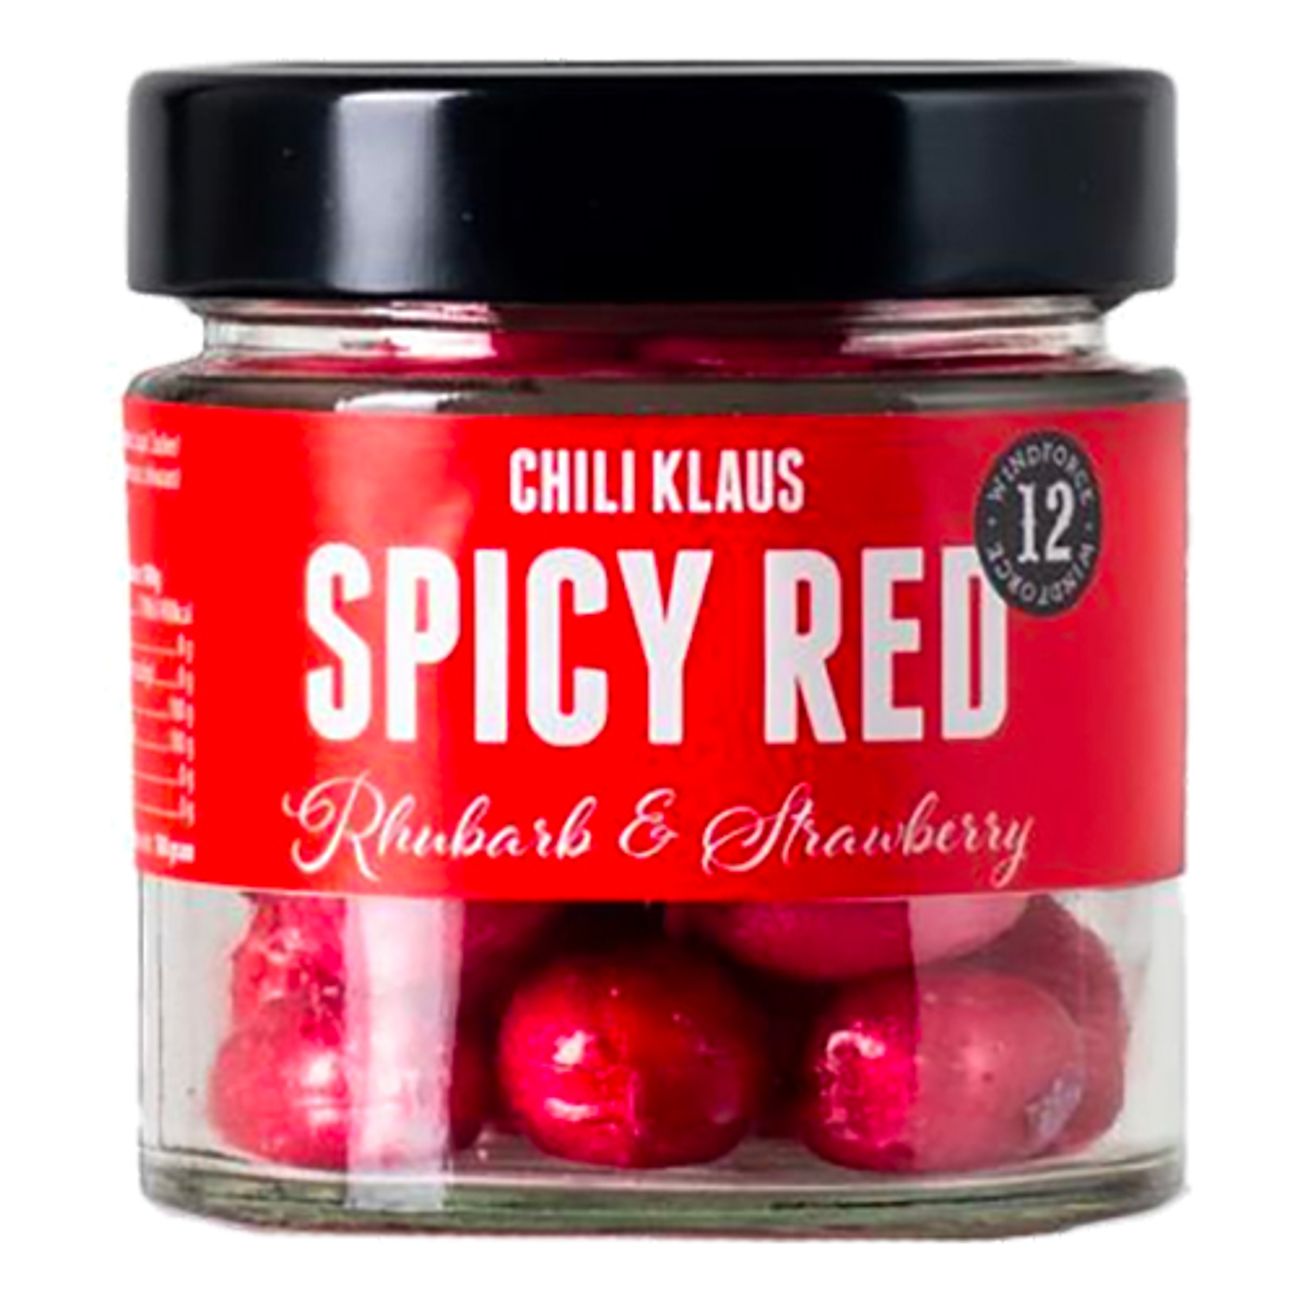 chili-klaus-spicy-red-rhubarb-strawberry-78995-1